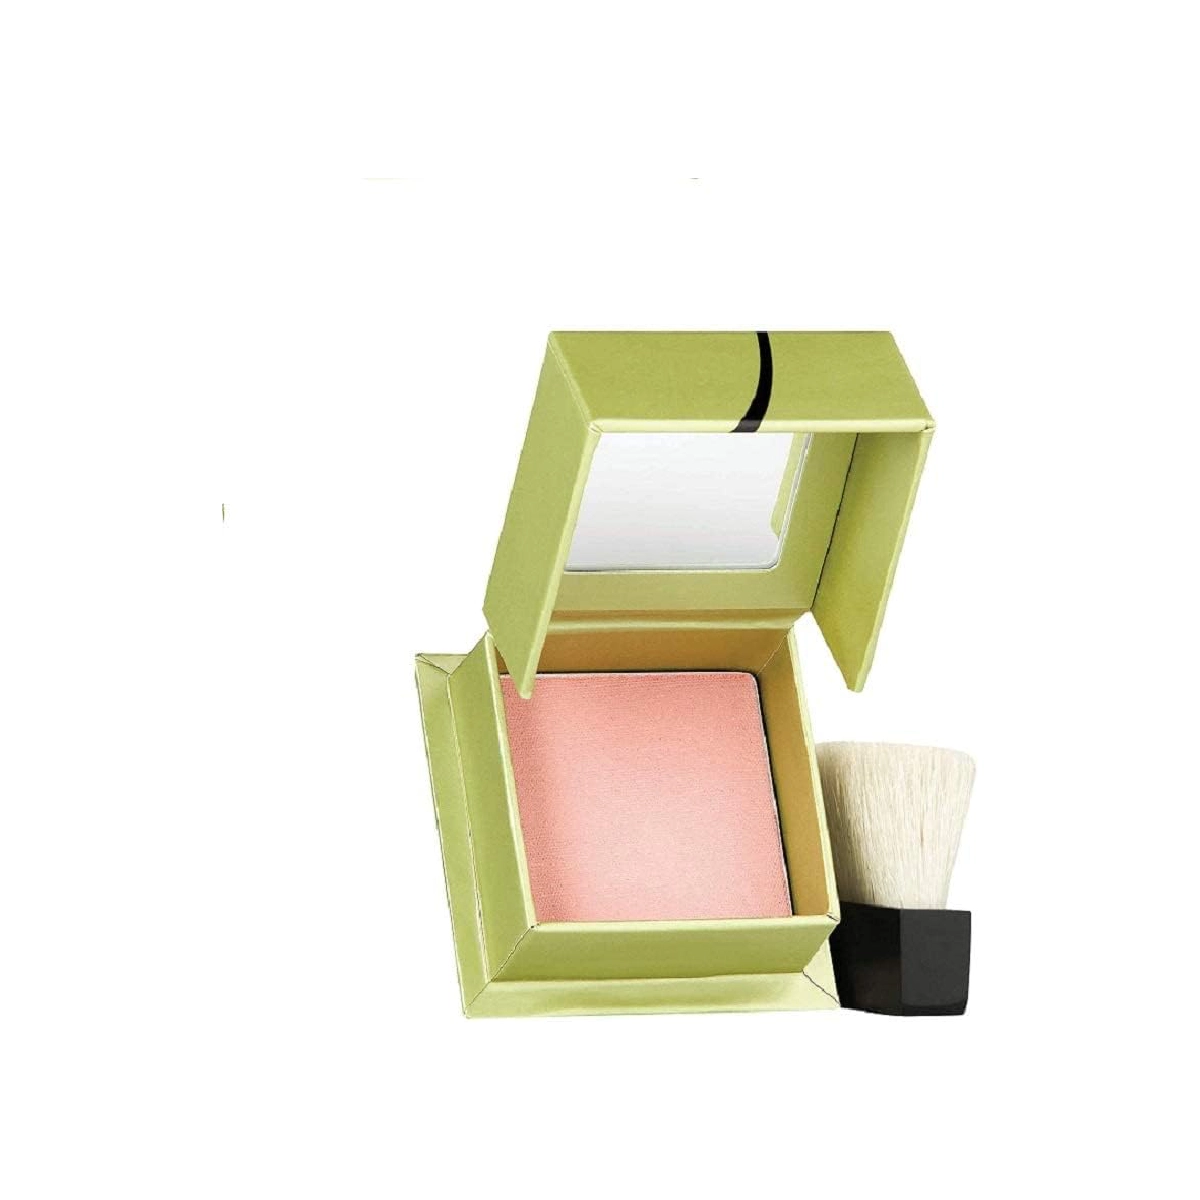 Benefit Cosmetics Dandelion Blush - a soft pink blush compact